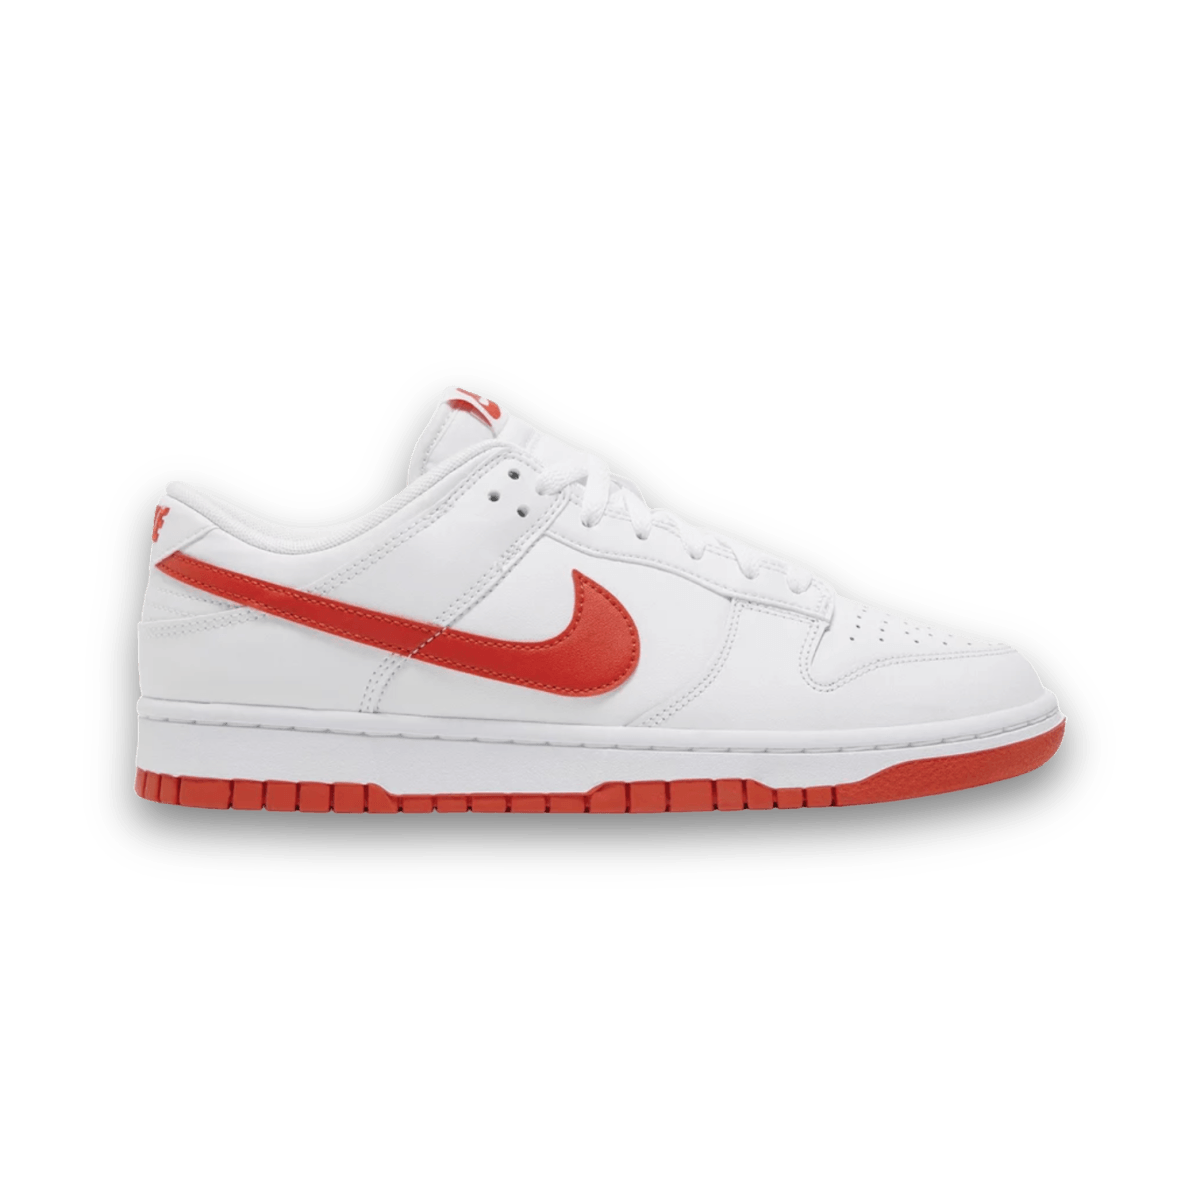 Dunk Low 'Picante Red' - Low Sneaker - Jawns on Fire Sneakers & Streetwear